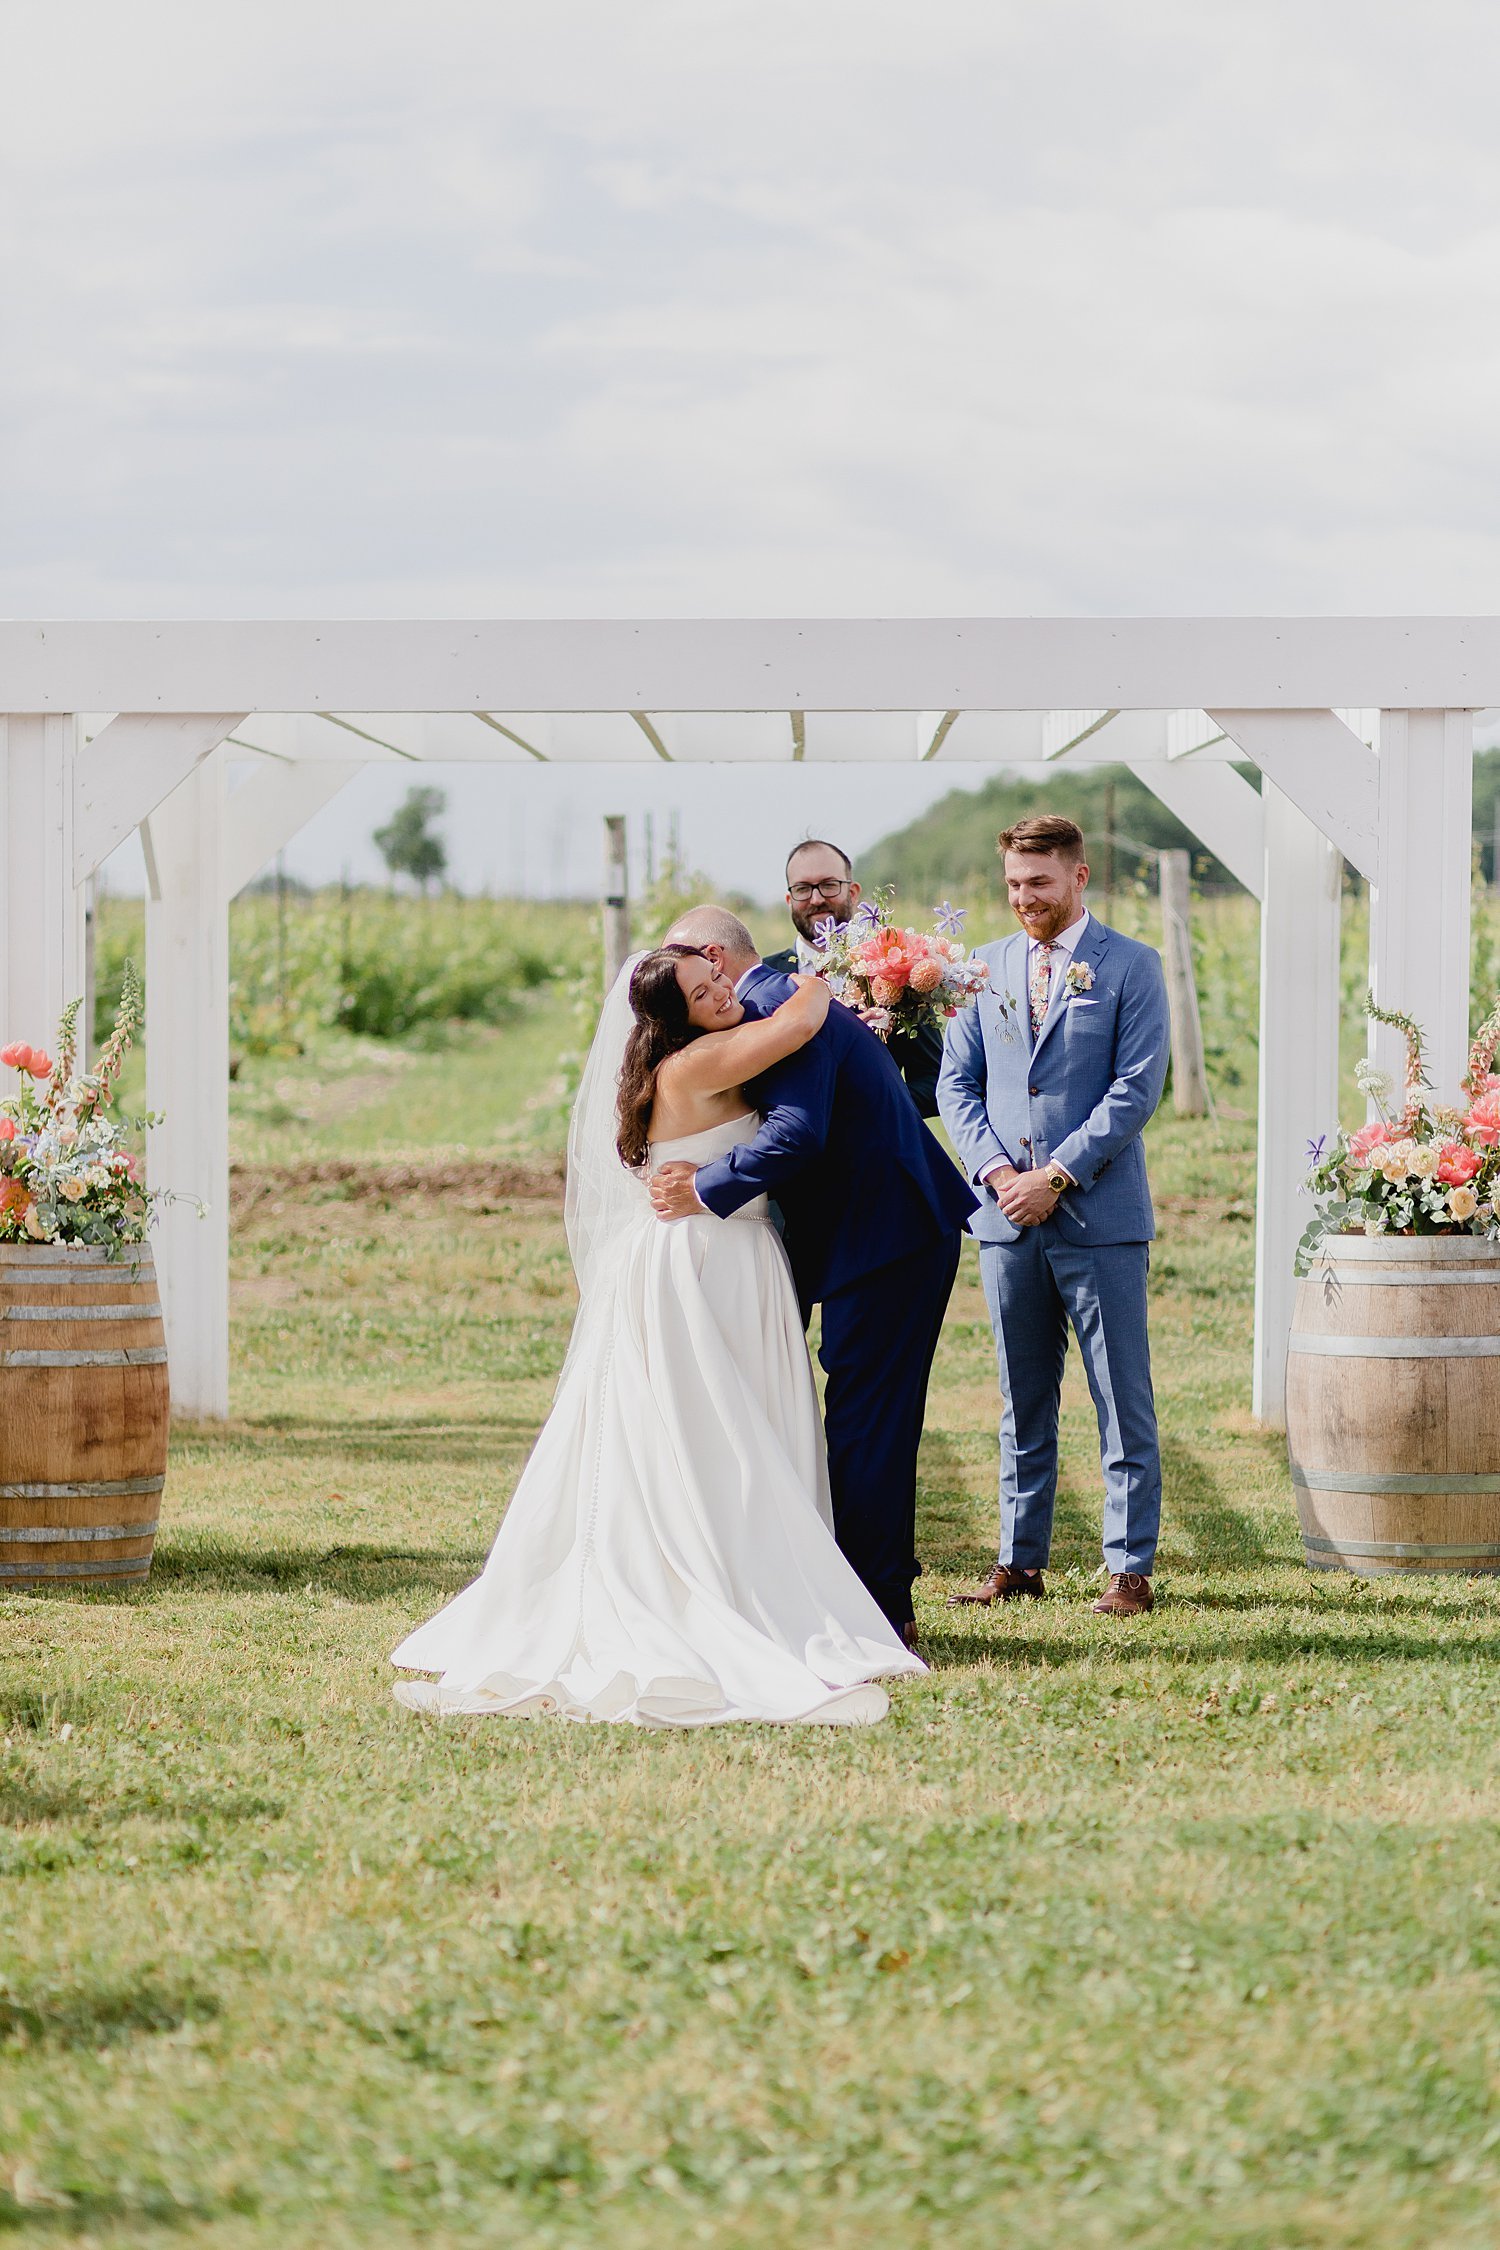 Casa Dea Winery Wedding in Prince Edward County | Prince Edward County Wedding Photographer | Holly McMurter Photographs_0075.jpg